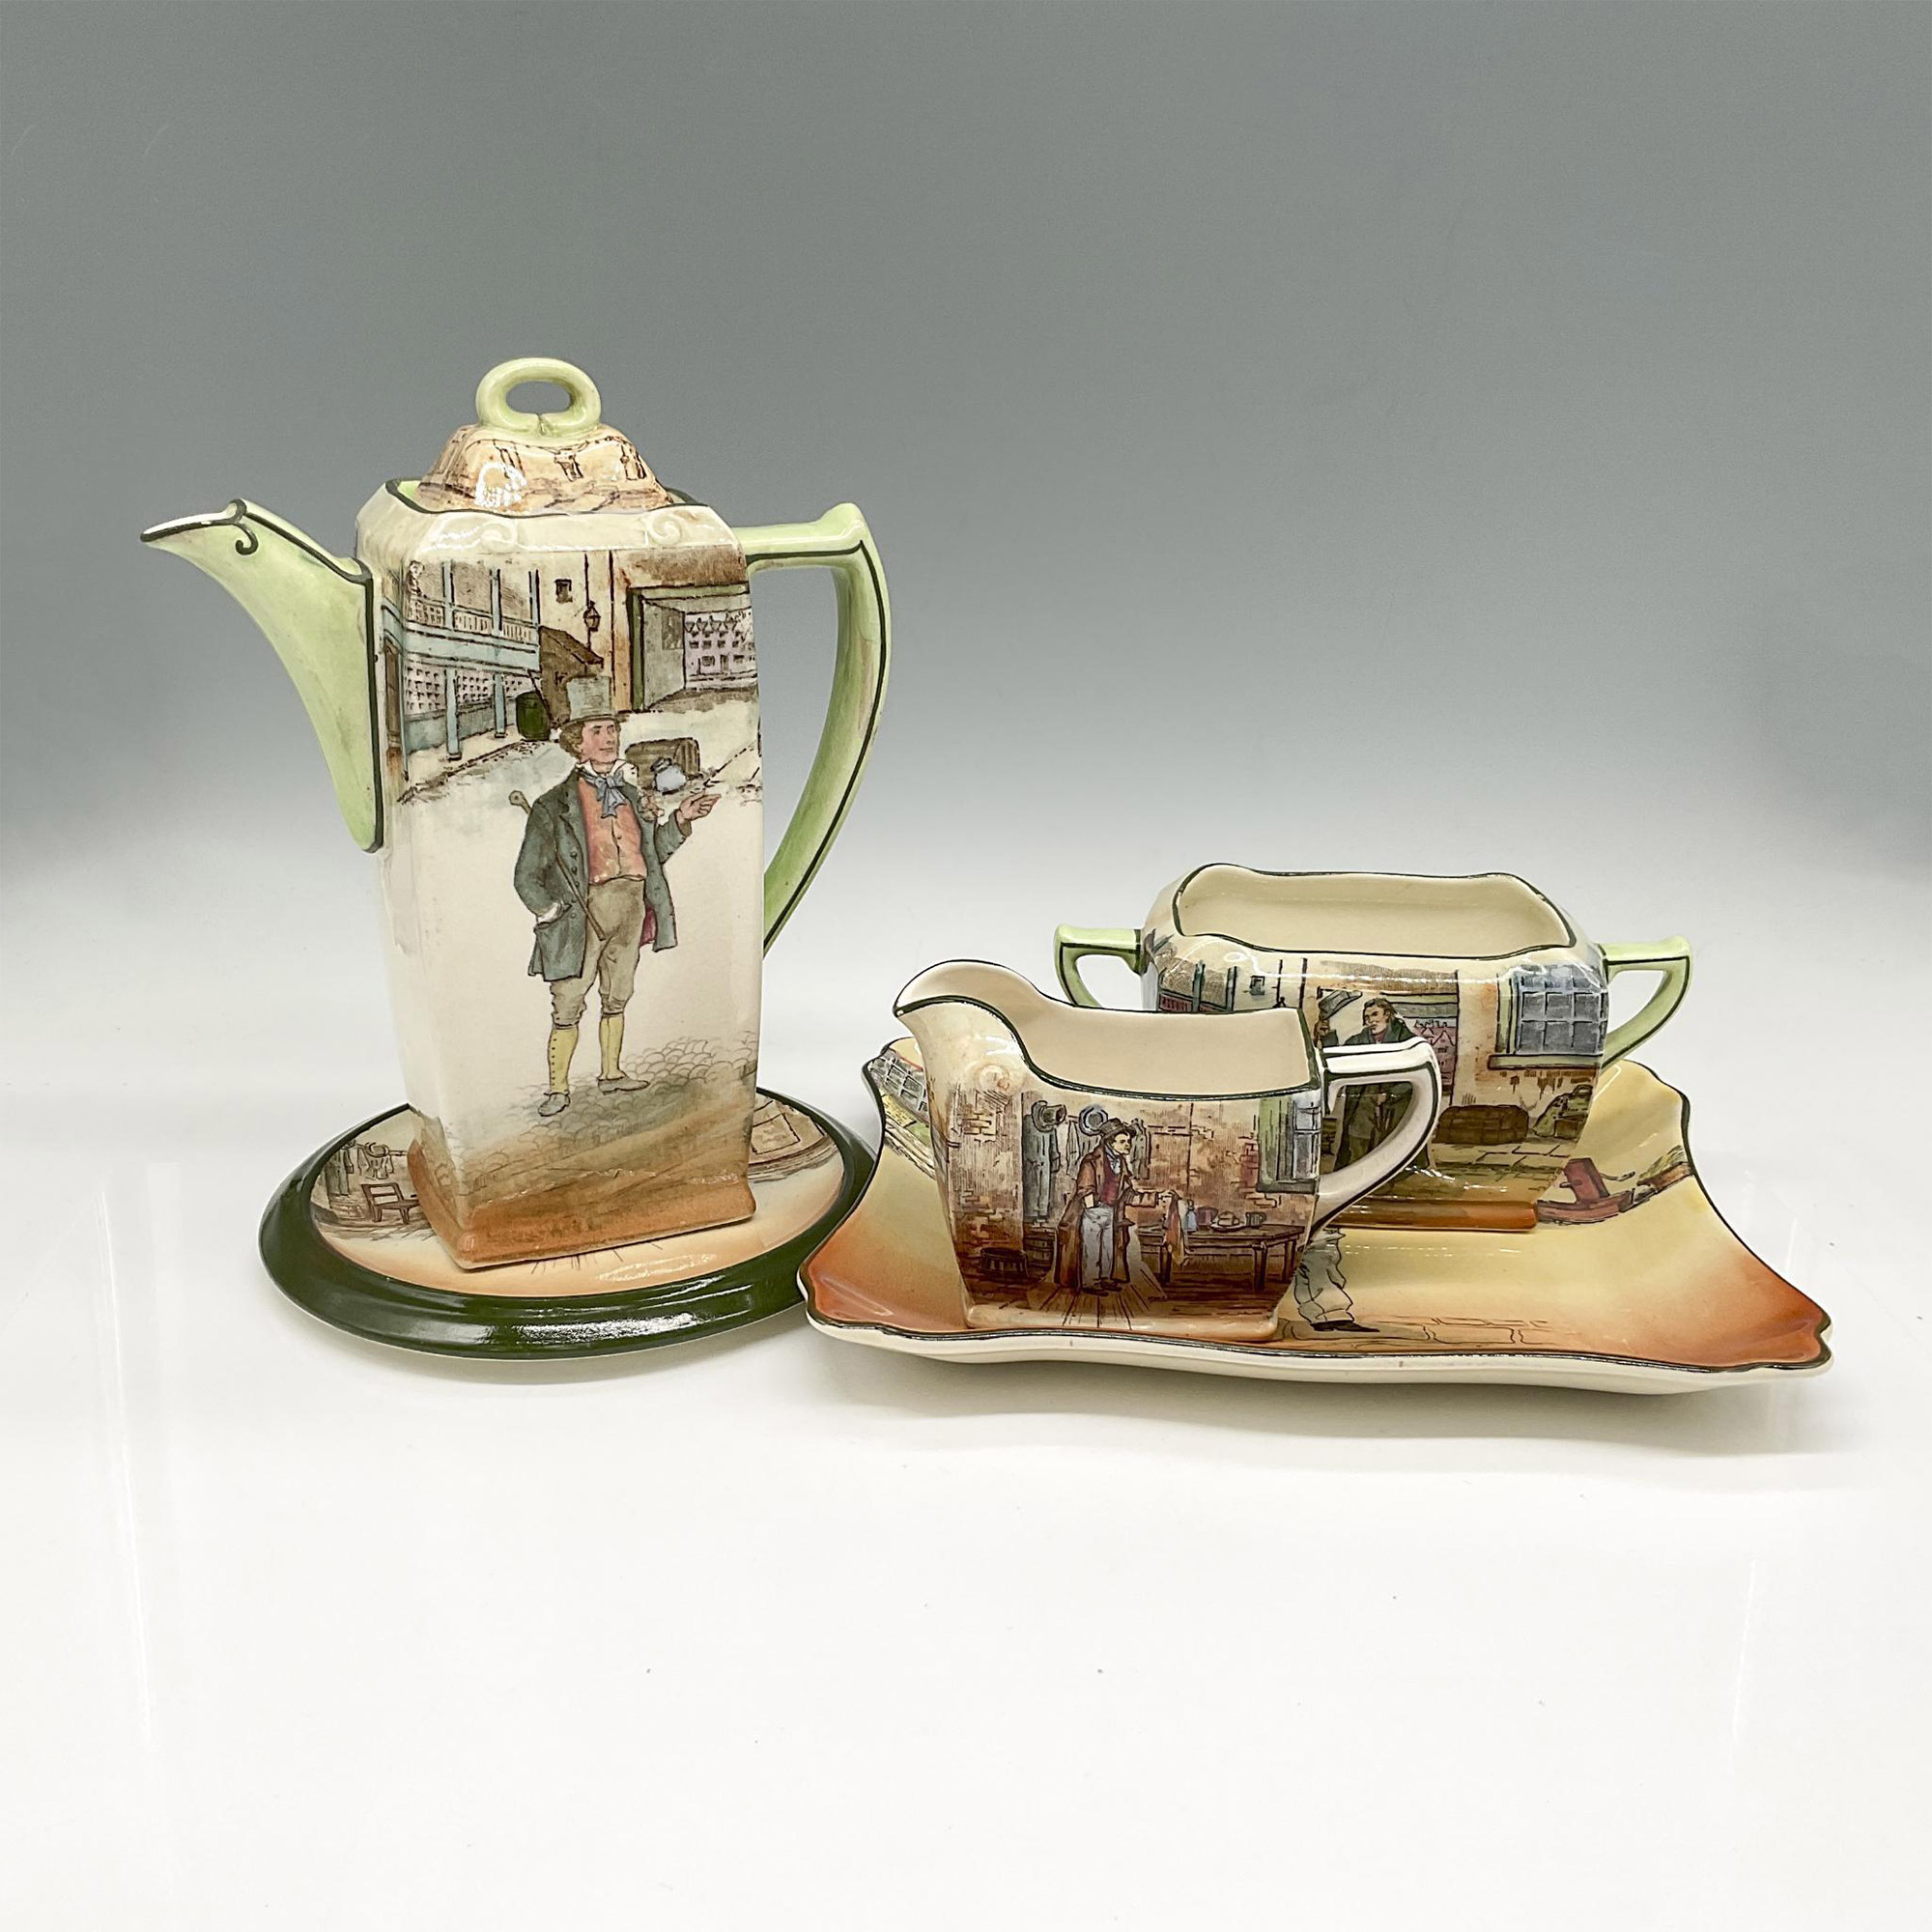 5pc Royal Doulton Dickens Ware Tea Service - Image 2 of 3